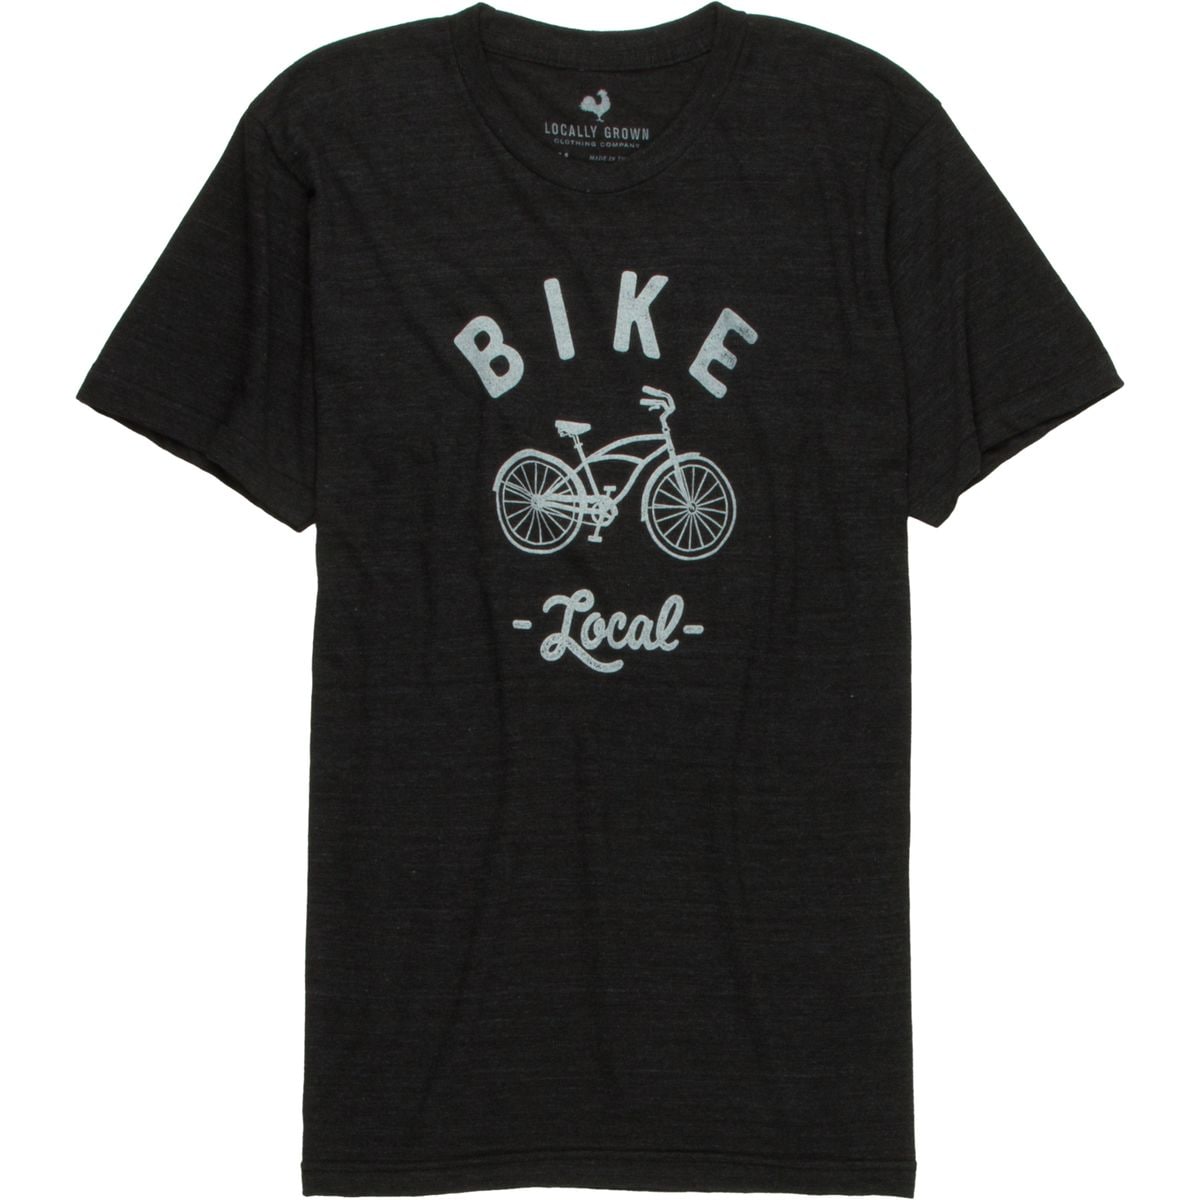 Locally Grown Bike Cruiser Tri-Blend Vintage T-Shirt - Short-Sleeve - Men's Vintage Black/White, M